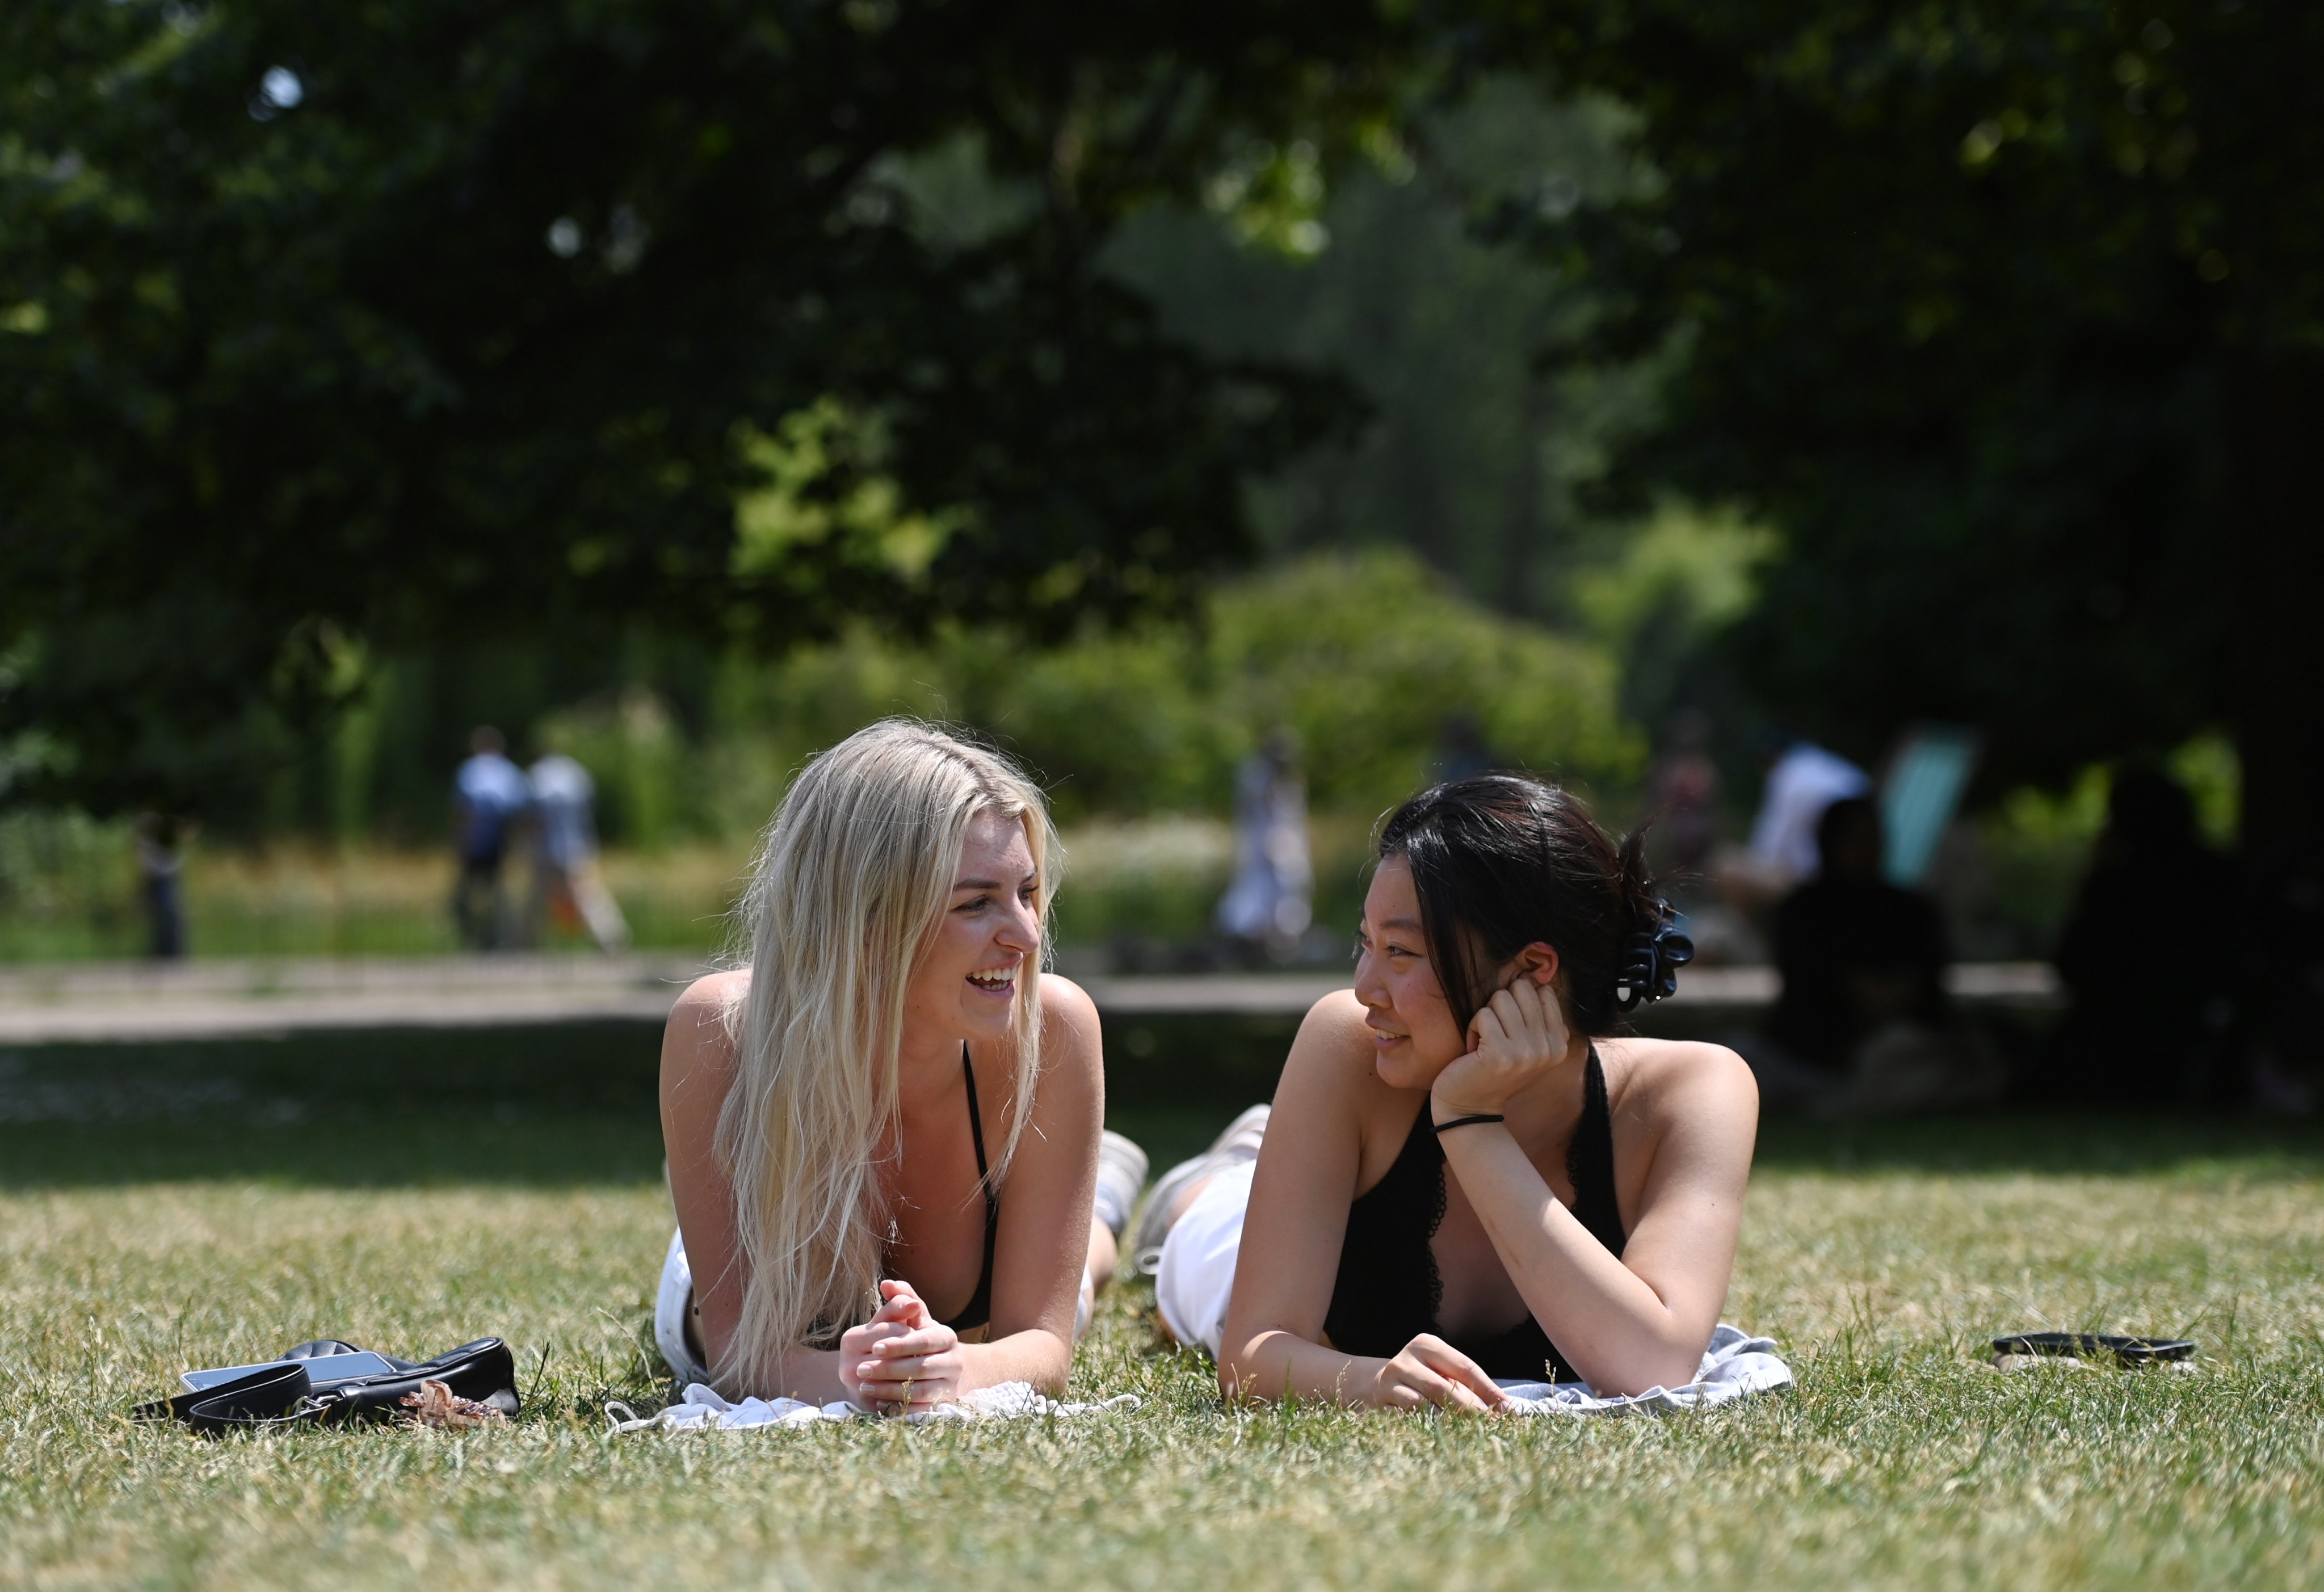 Women sunbathe in St James’ Park, London during a record-breaking heatwave in June. Photo: EPA-EFE